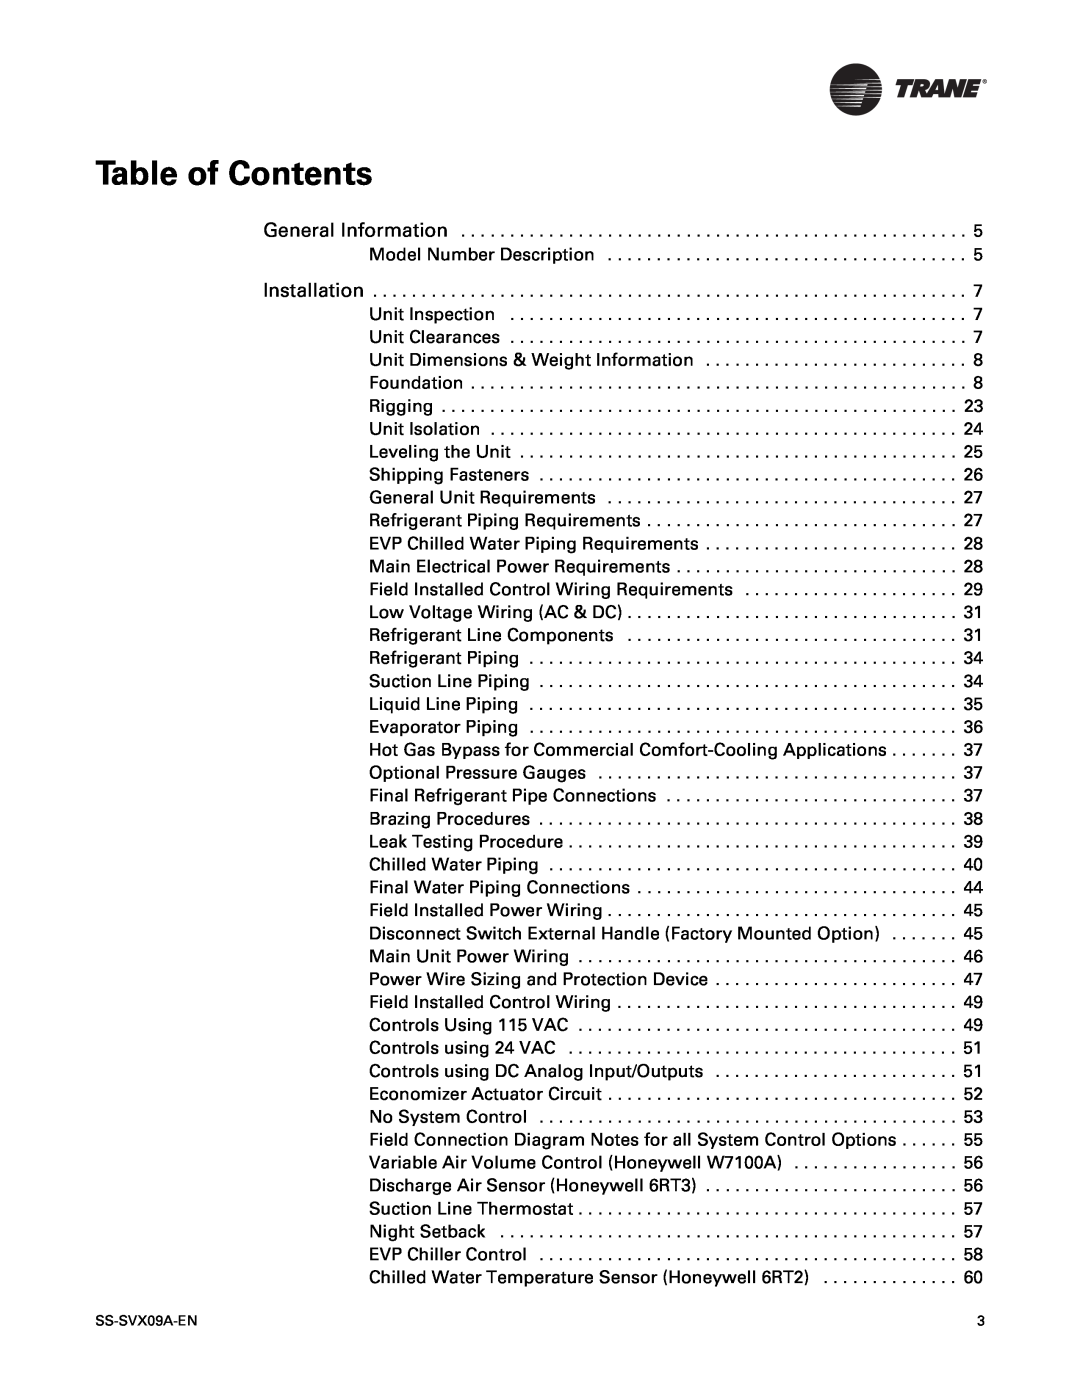 Trane RAUC-C20, RAUC-C50, RAUC-C30, RAUC-C60, RAUC-C40, RAUC-C25 manual Table of Contents, SS-SVX09A-EN 